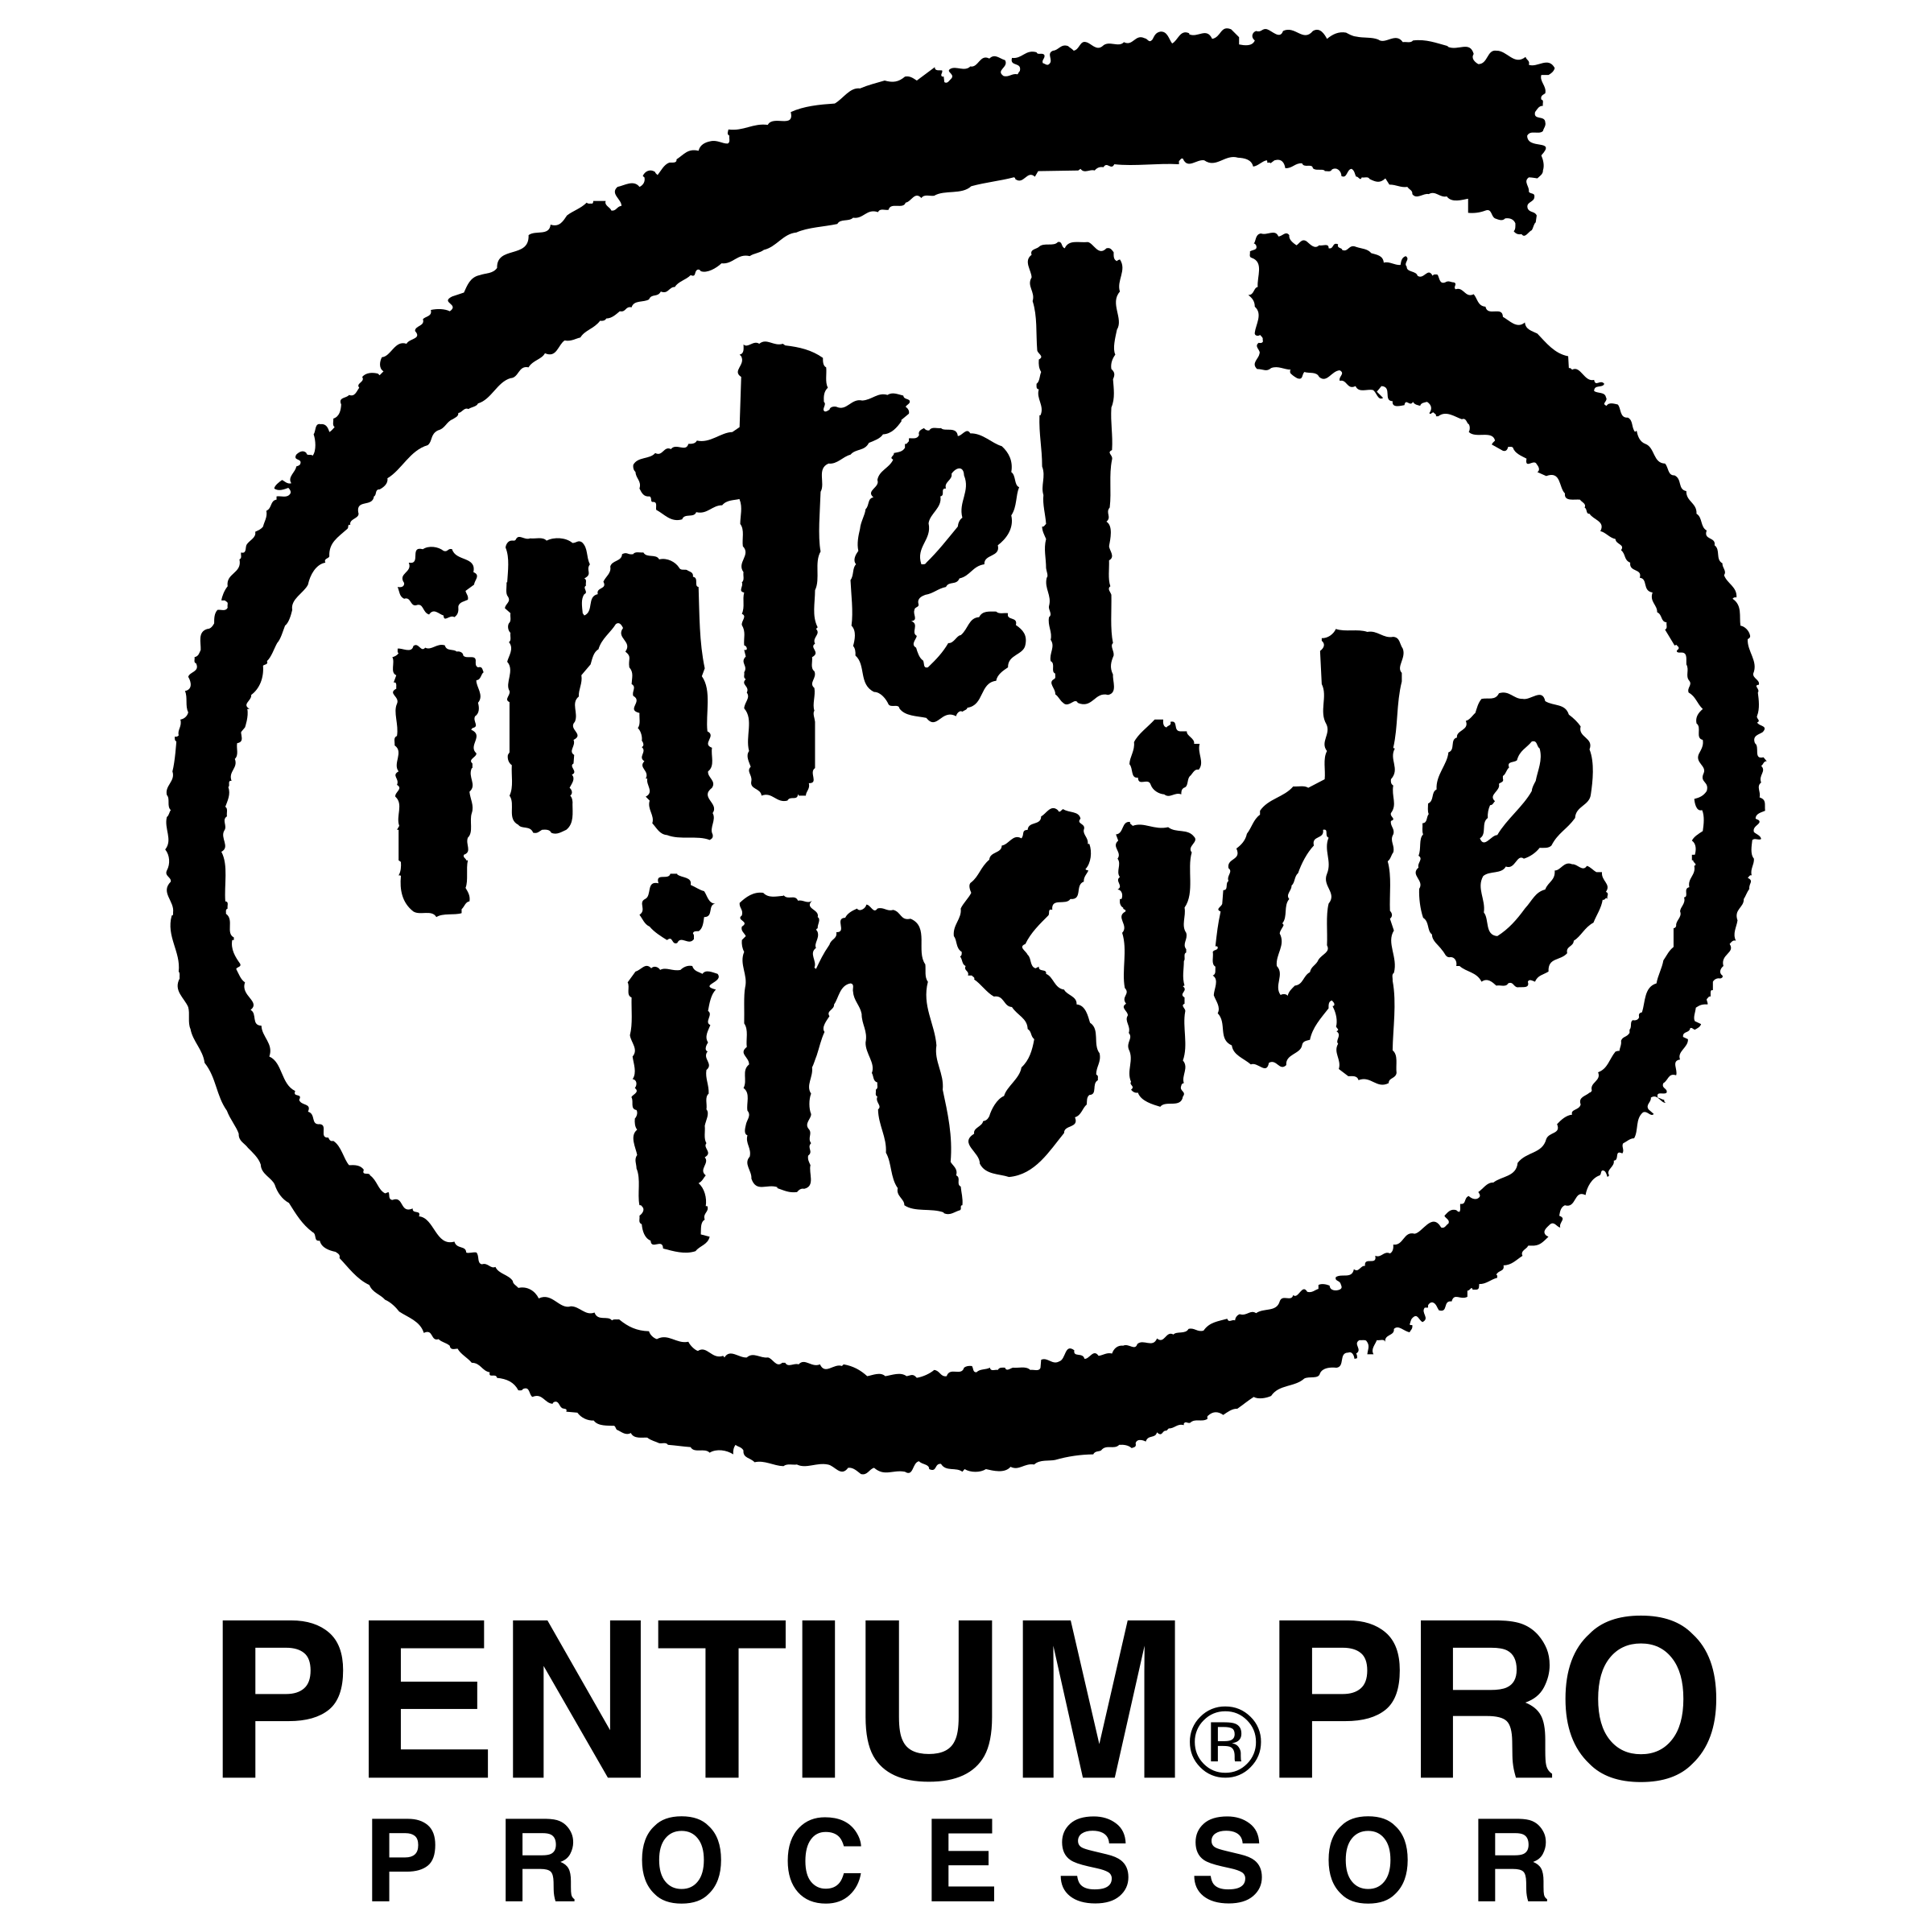 Intel Pentium Processor Logo - Pentium Pro Processor Logo PNG Transparent & SVG Vector